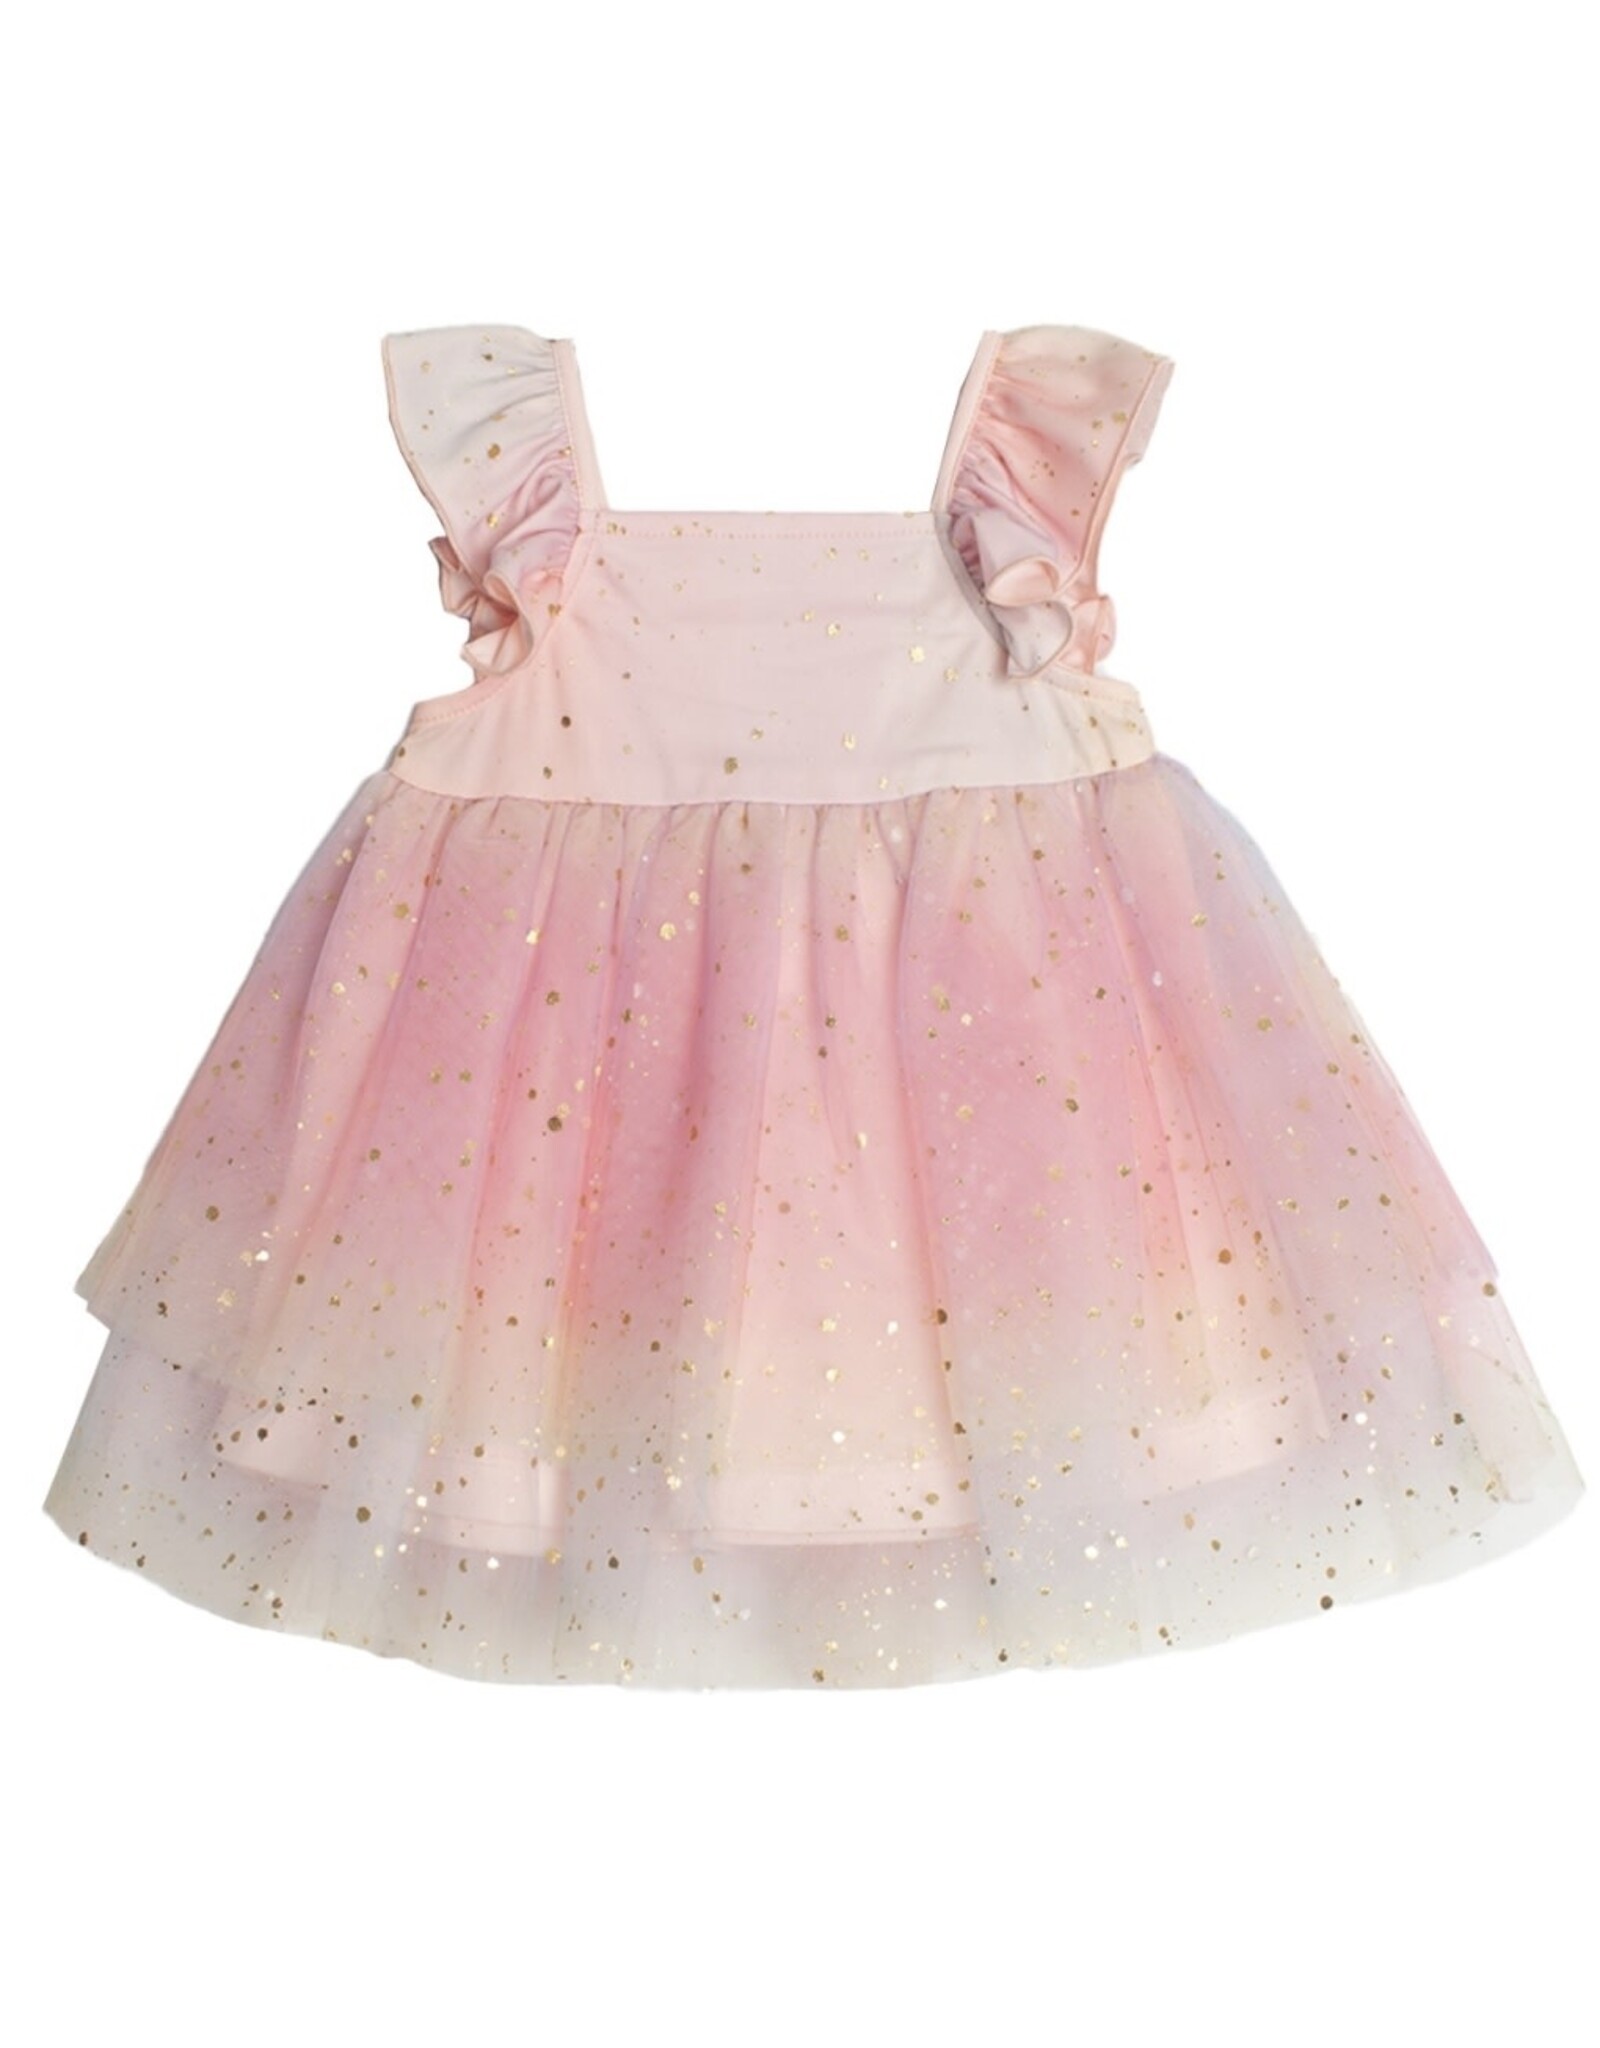 Isobella & Chloe Isobella & Chloe- Rainbow Delight Flutter Sleeve Dress